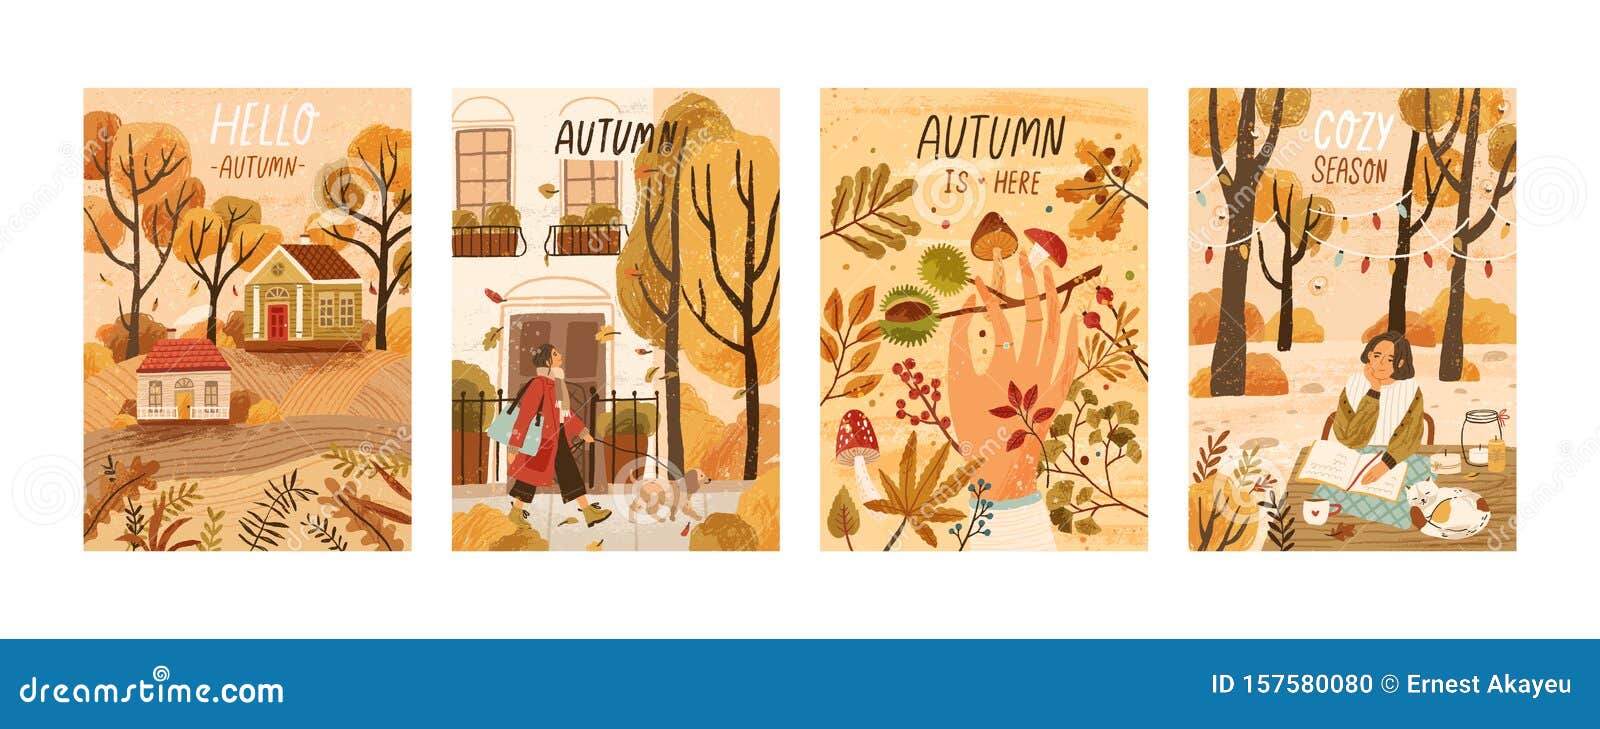 autumn mood hand drawn poster templates set. fall season nature flat  s. people enjoying cozy pastime